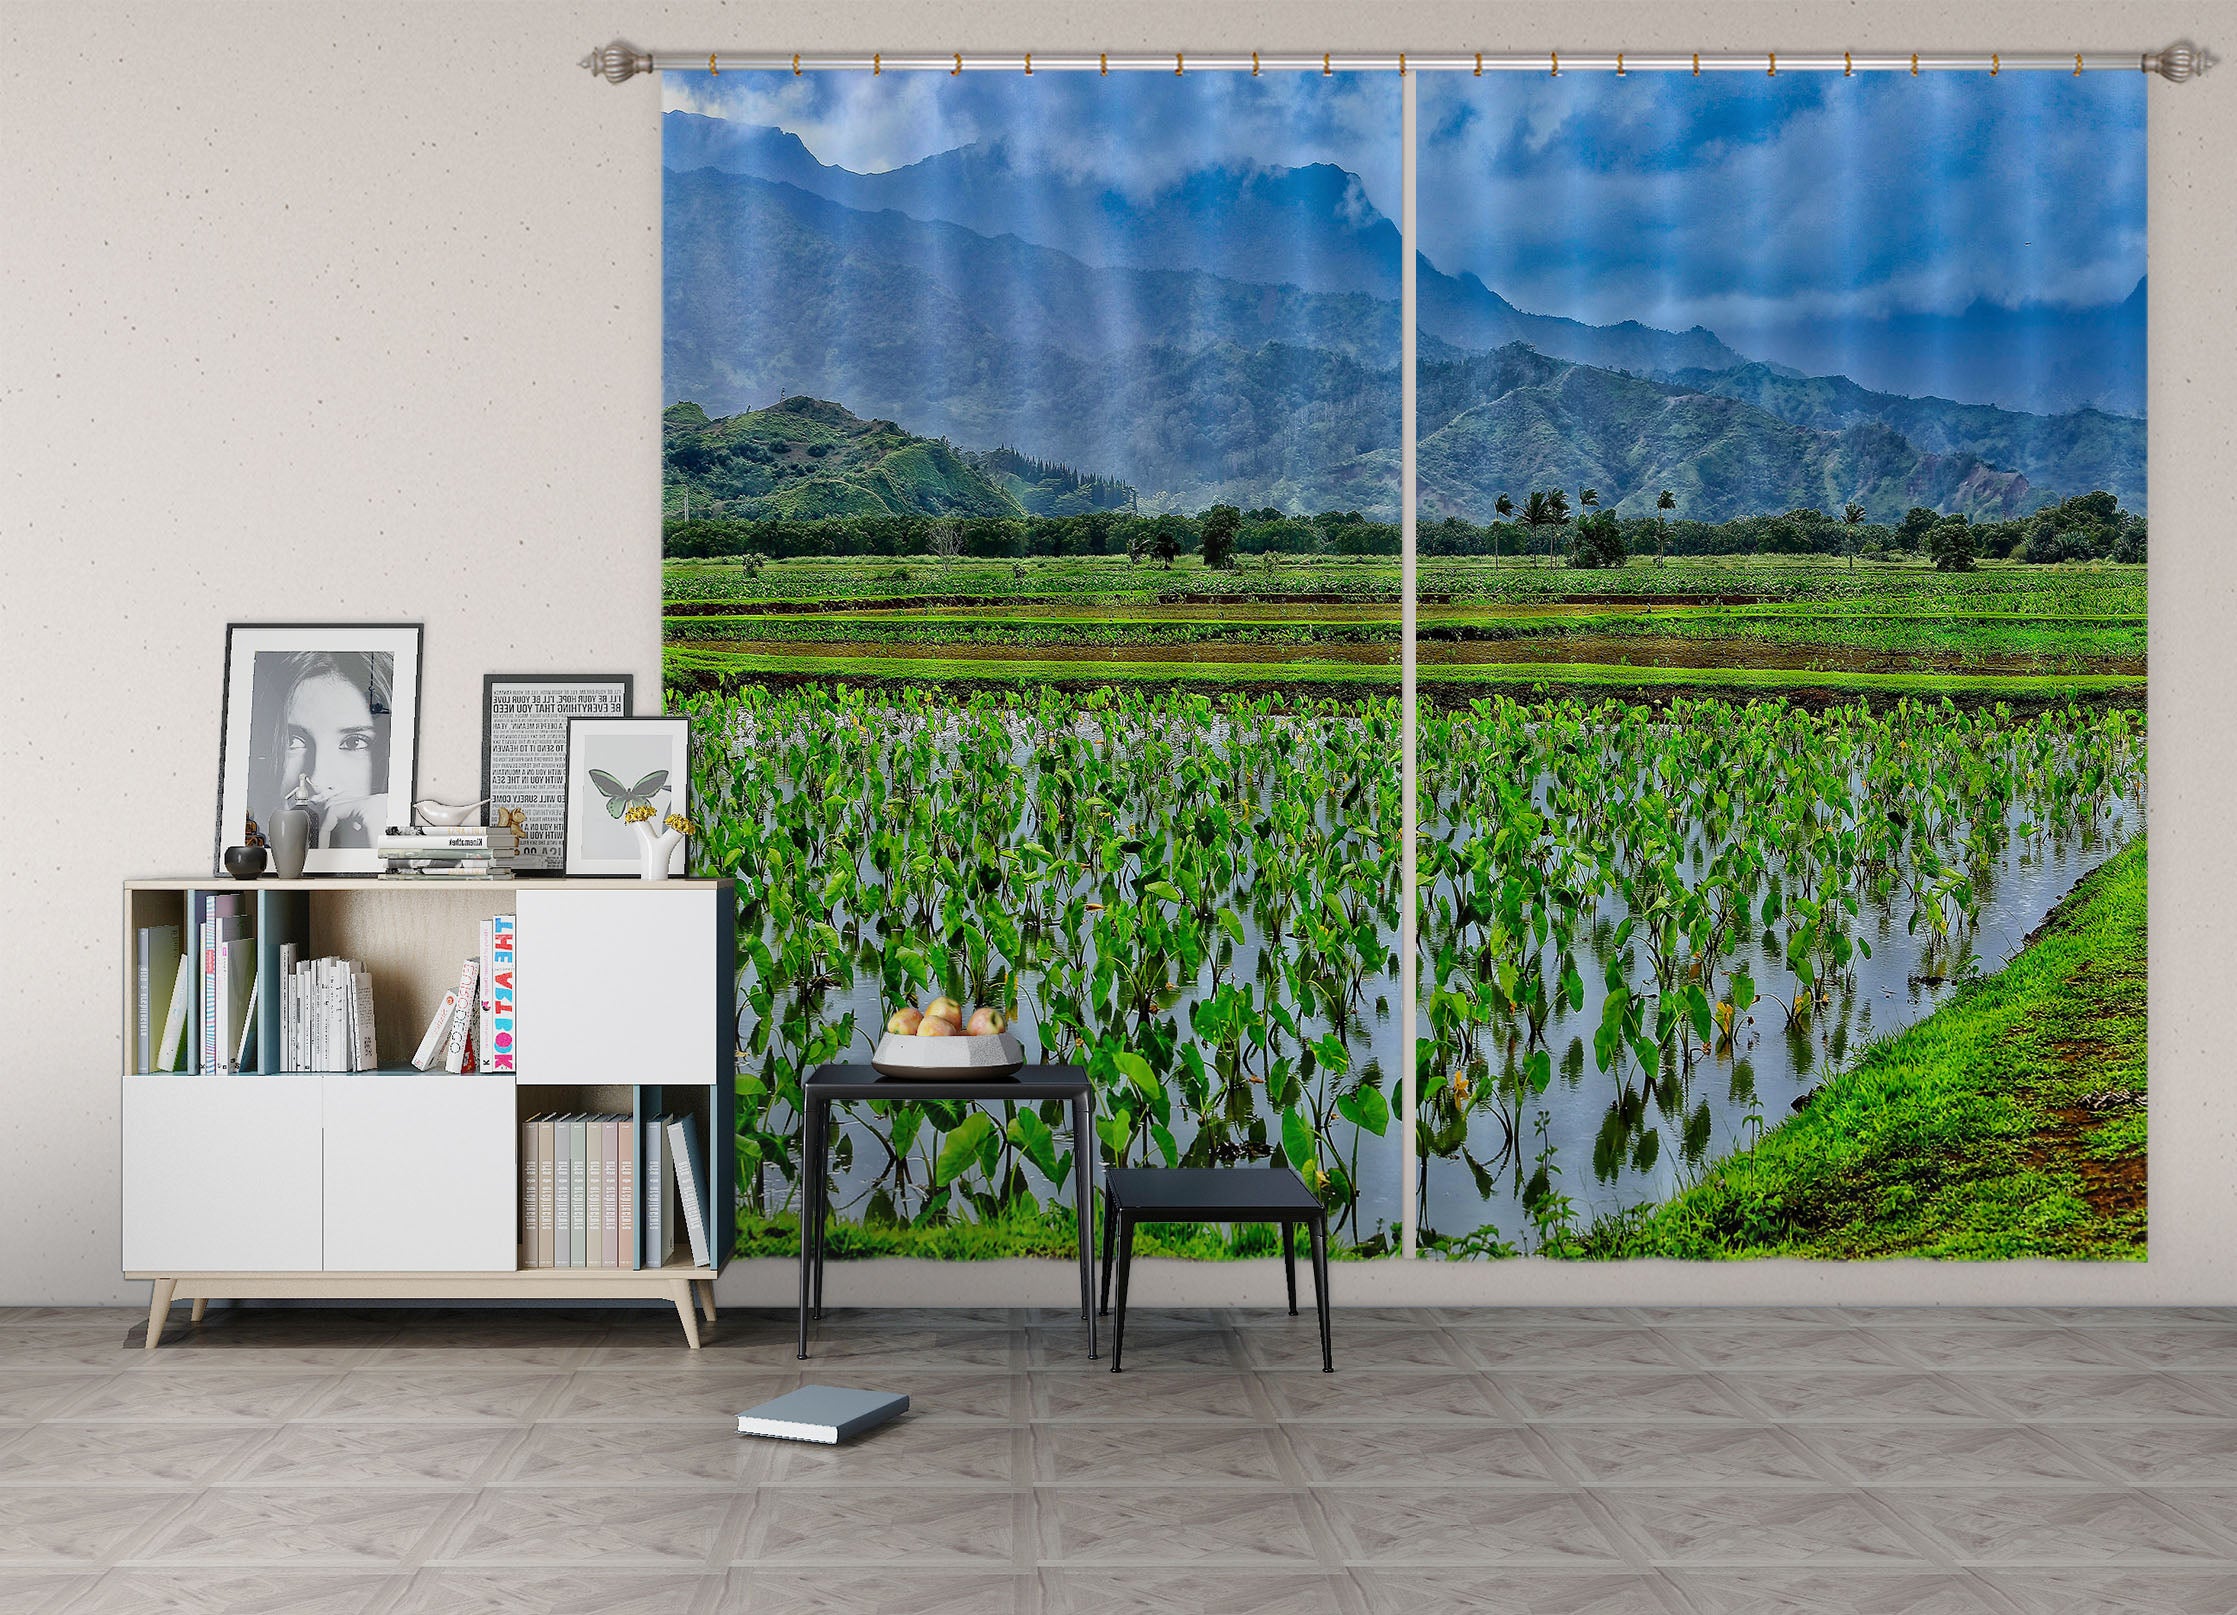 3D Taro Fields 11170 Kathy Barefield Curtain Curtains Drapes